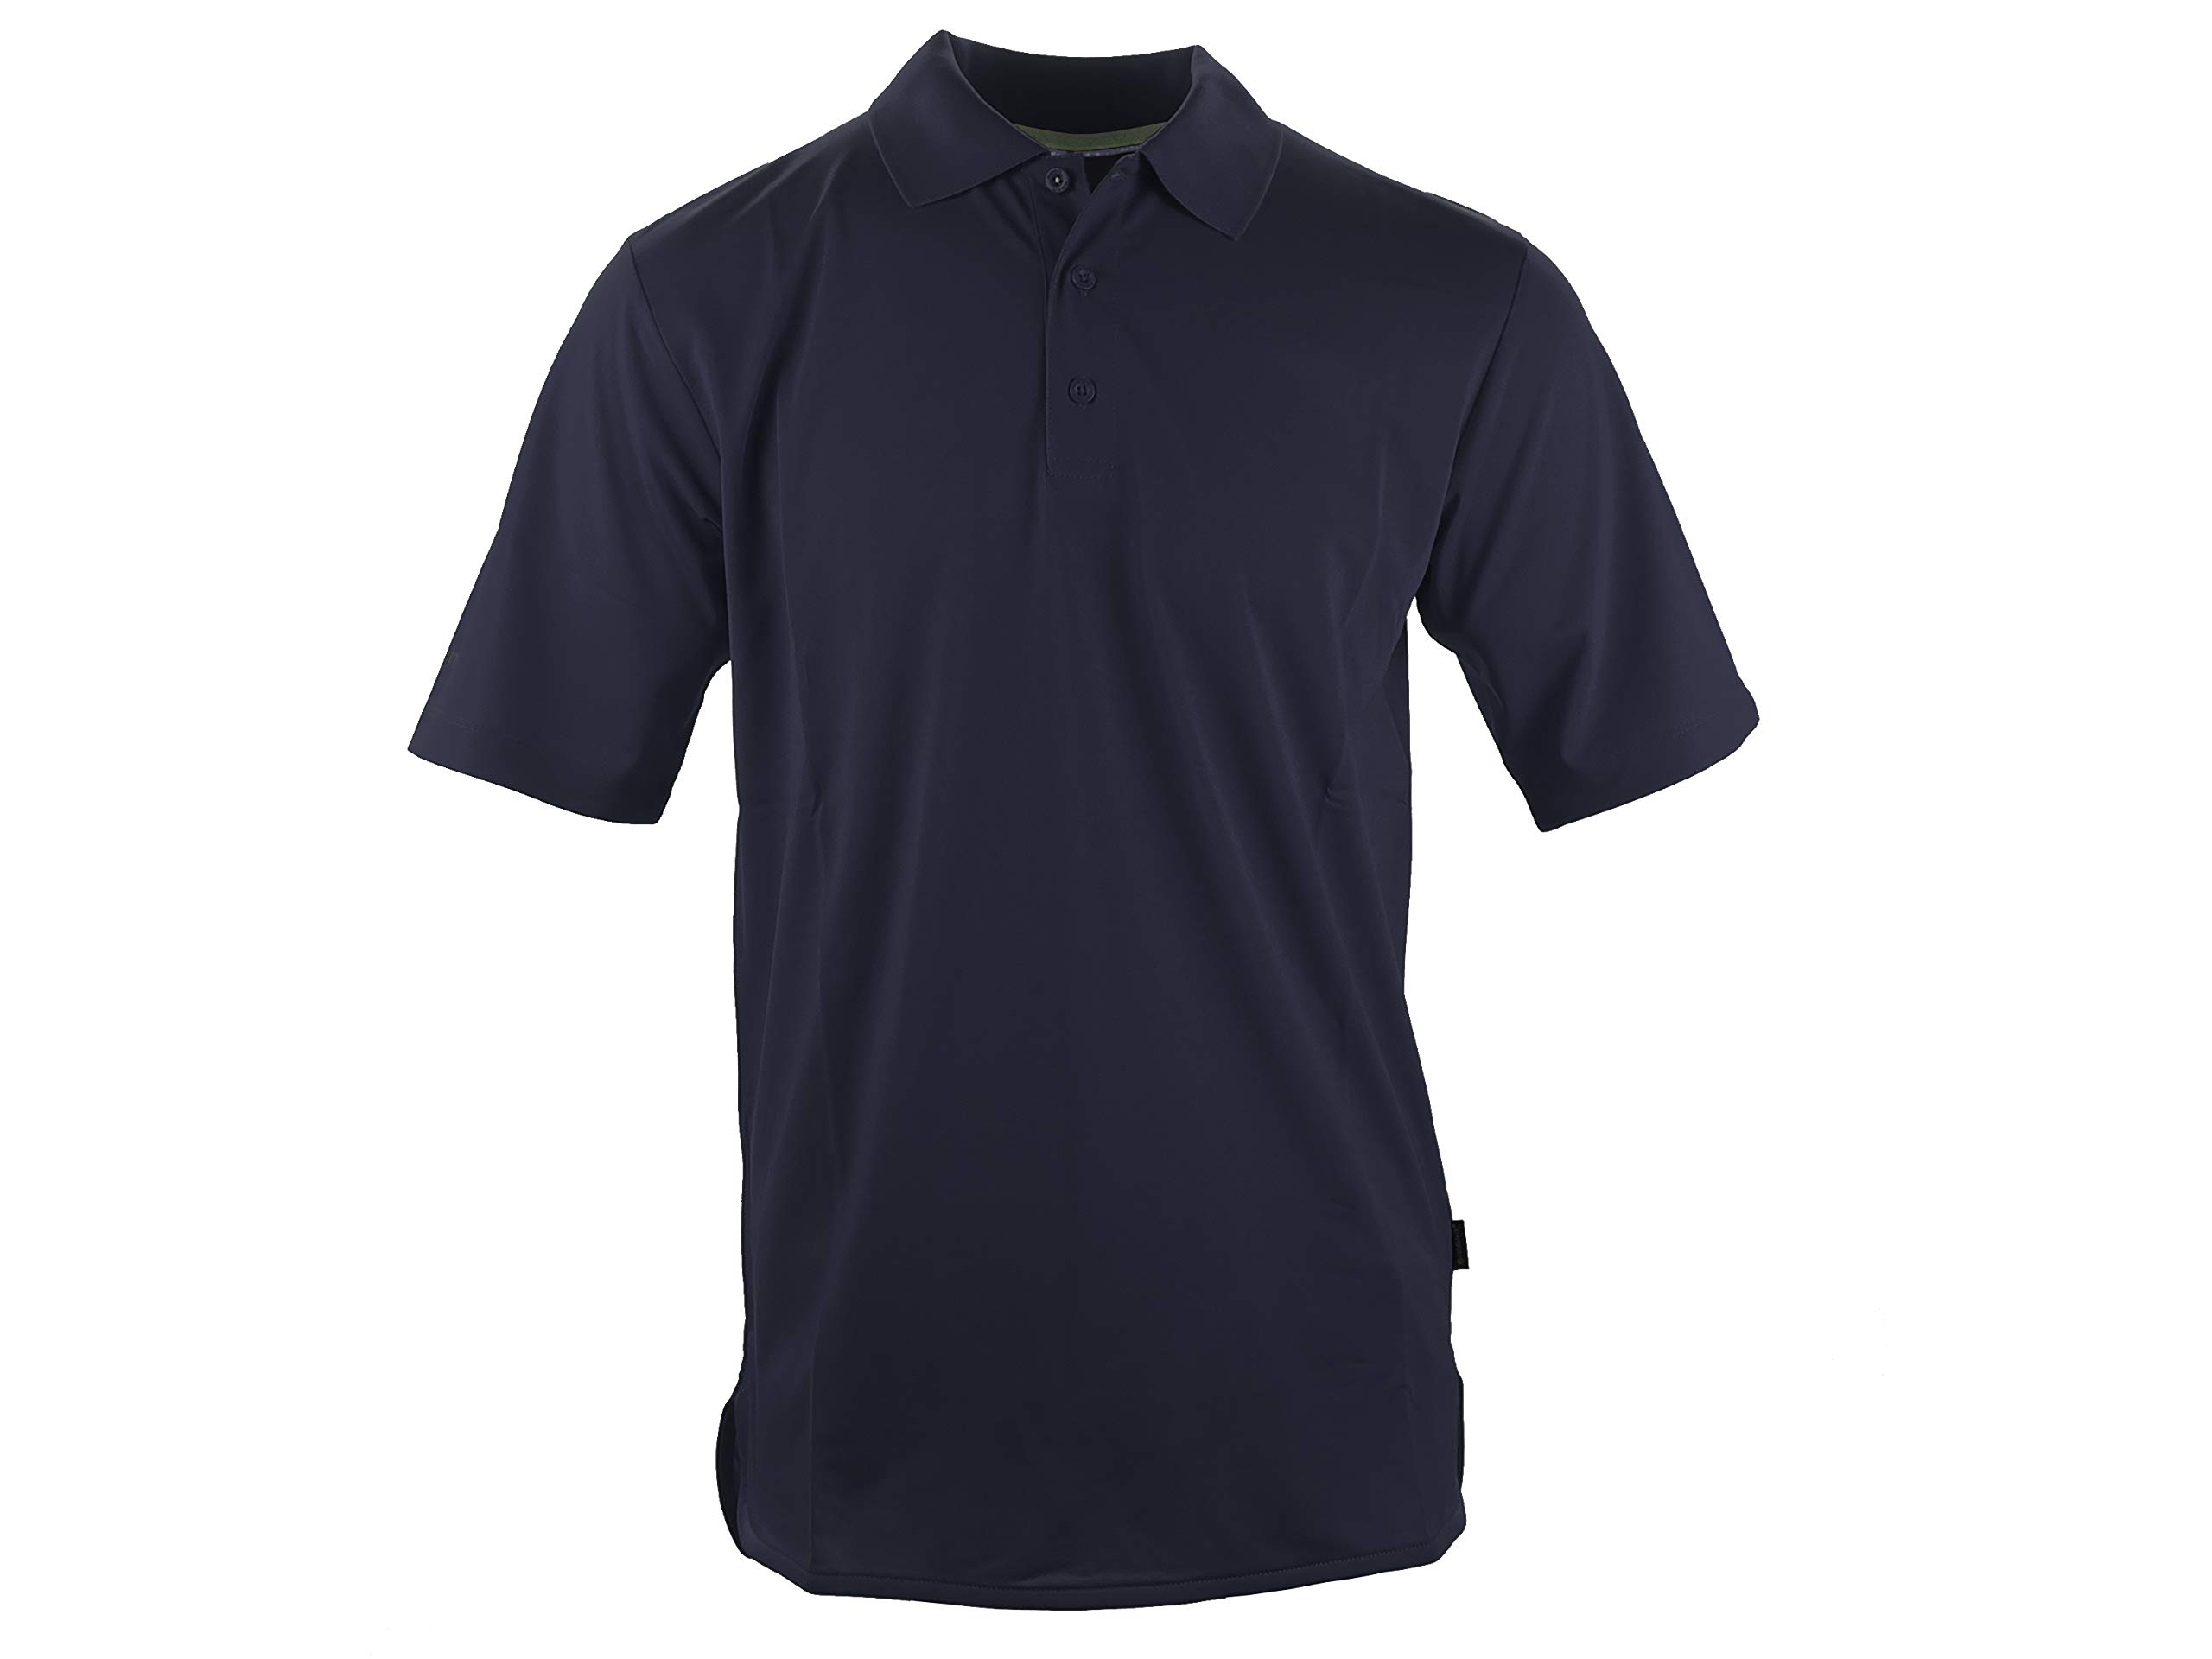 Herren Poloshirt Extreme Performance - Kurzarm-Hemd für Männer mit Knopfleiste, atmungsaktiv, bügelfrei, antibakteriell - Sport, Casual, Business, Made in EU (Marine Blau, XS)